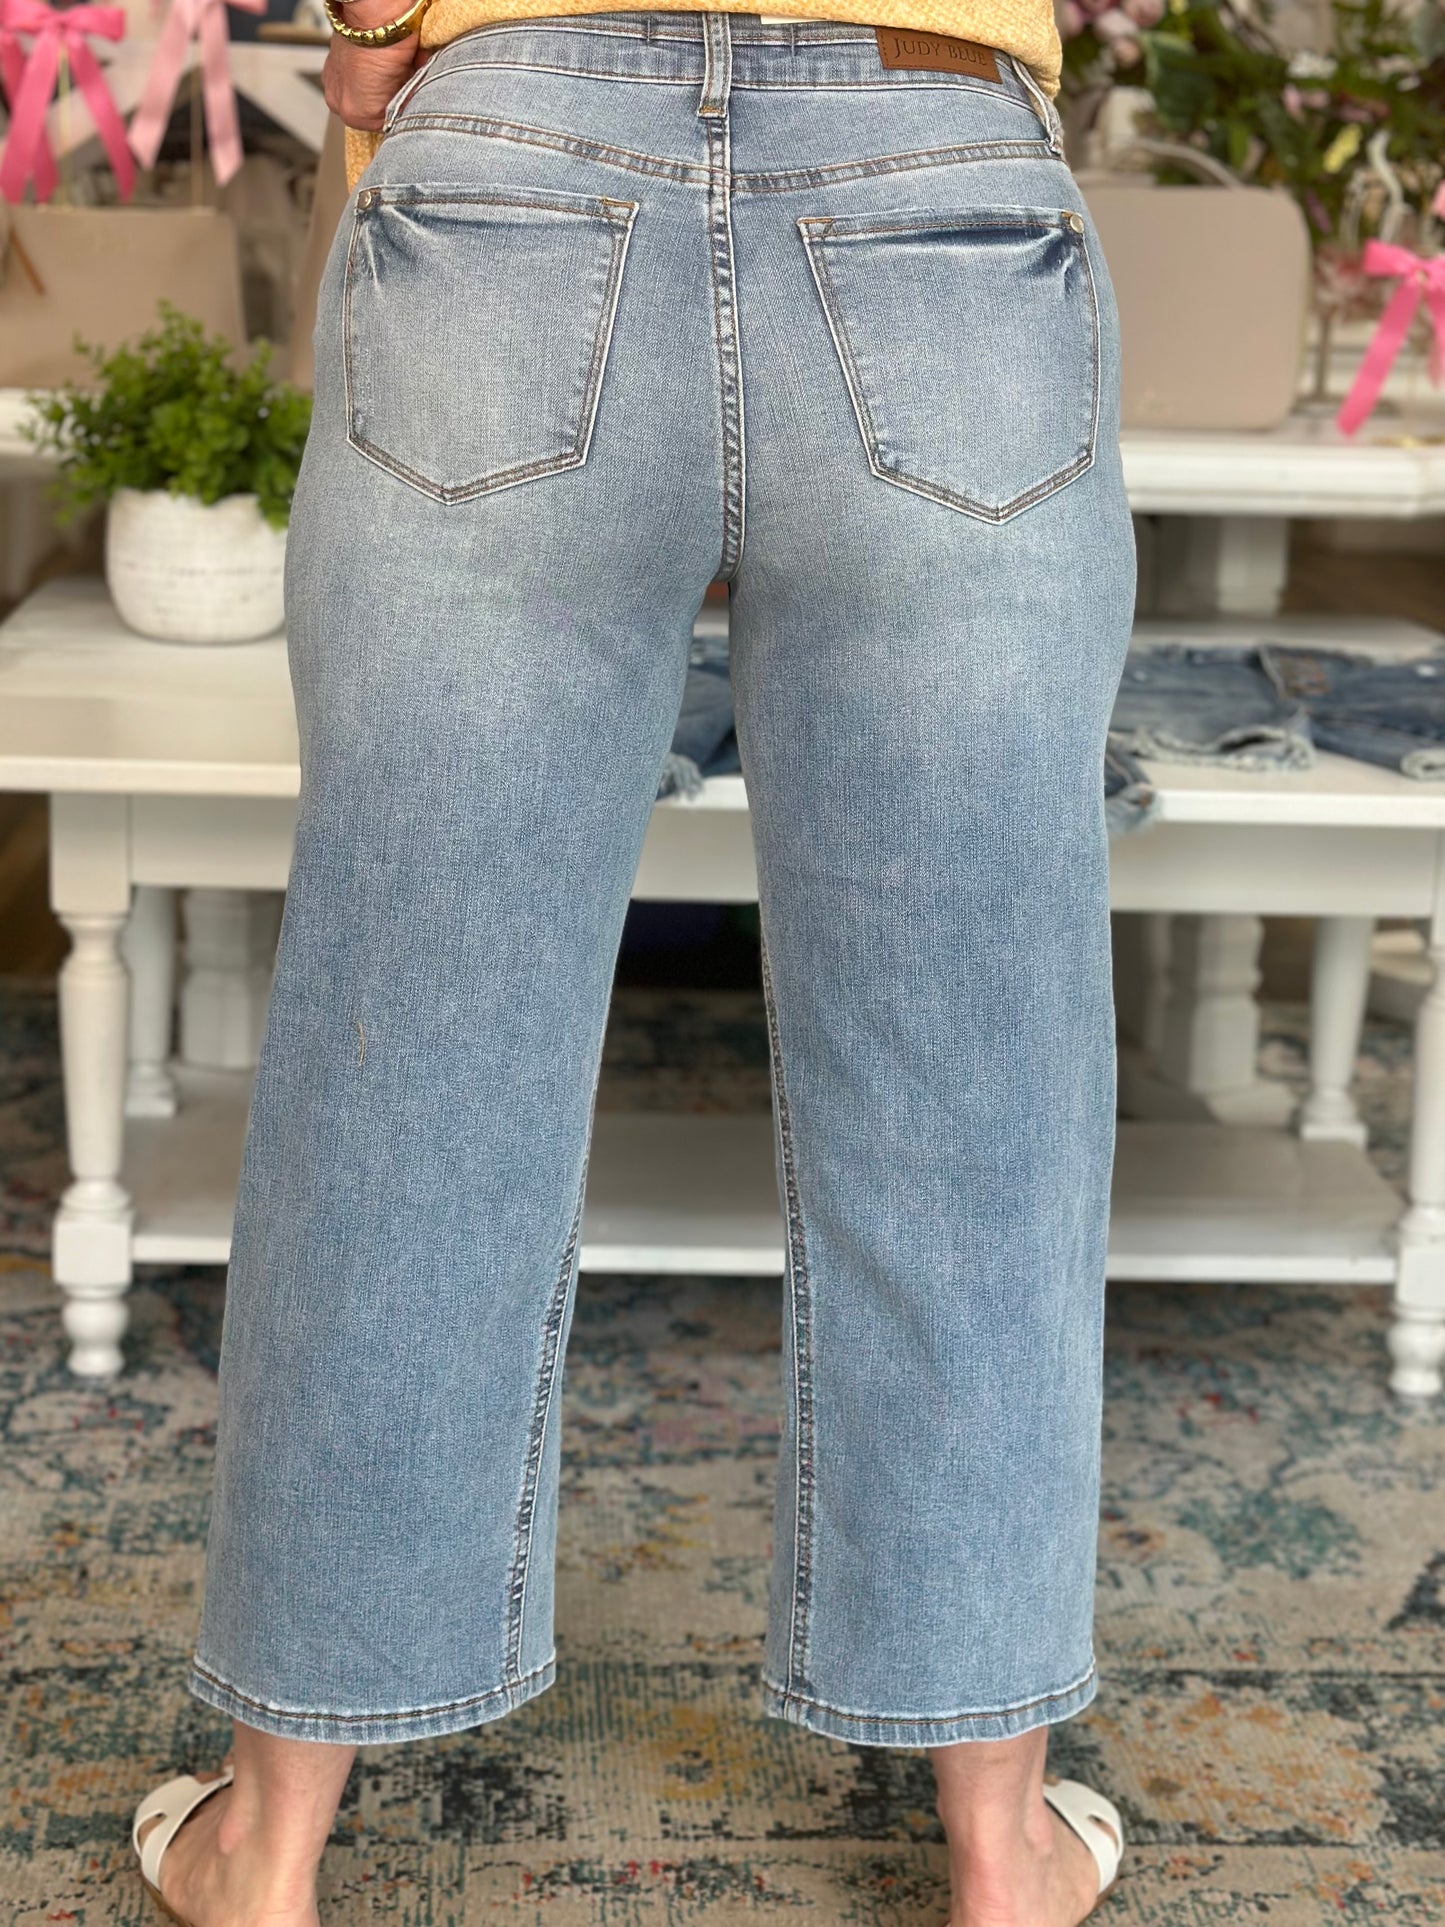 NEW! Judy Blue Lainey crop jeans in medium wash